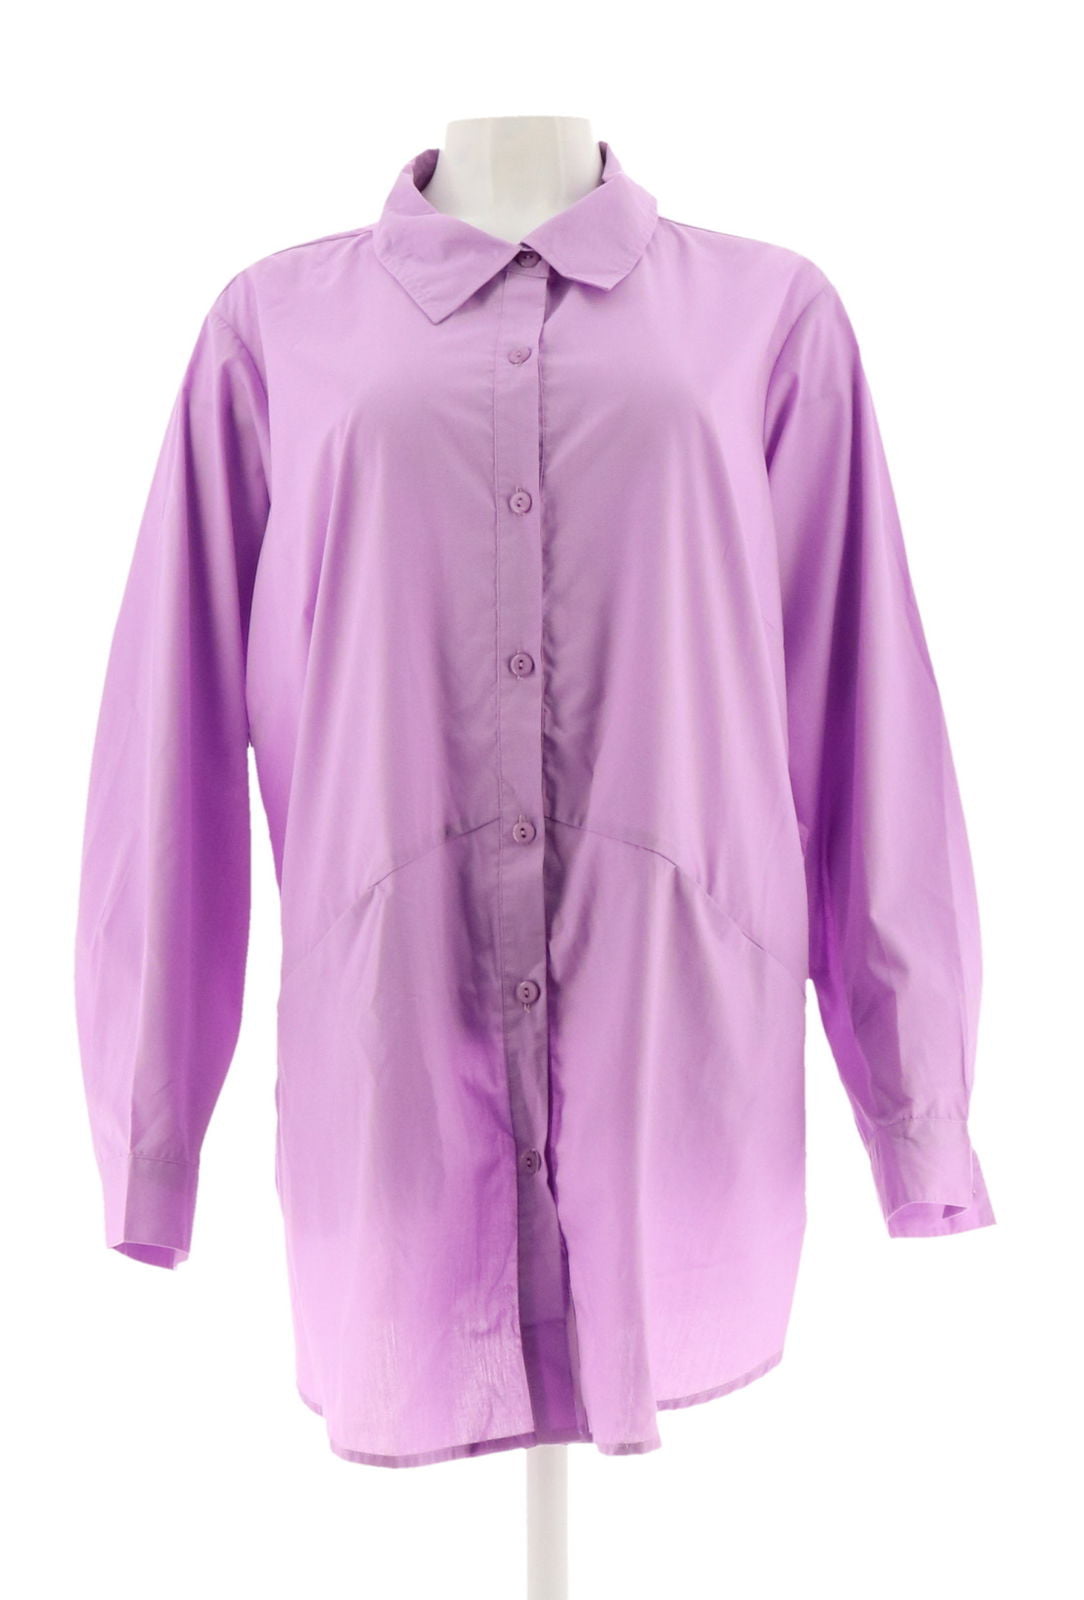 Brand - Joan Rivers Boyfriend Shirt Pocket Seam A275703 - Walmart.com ...